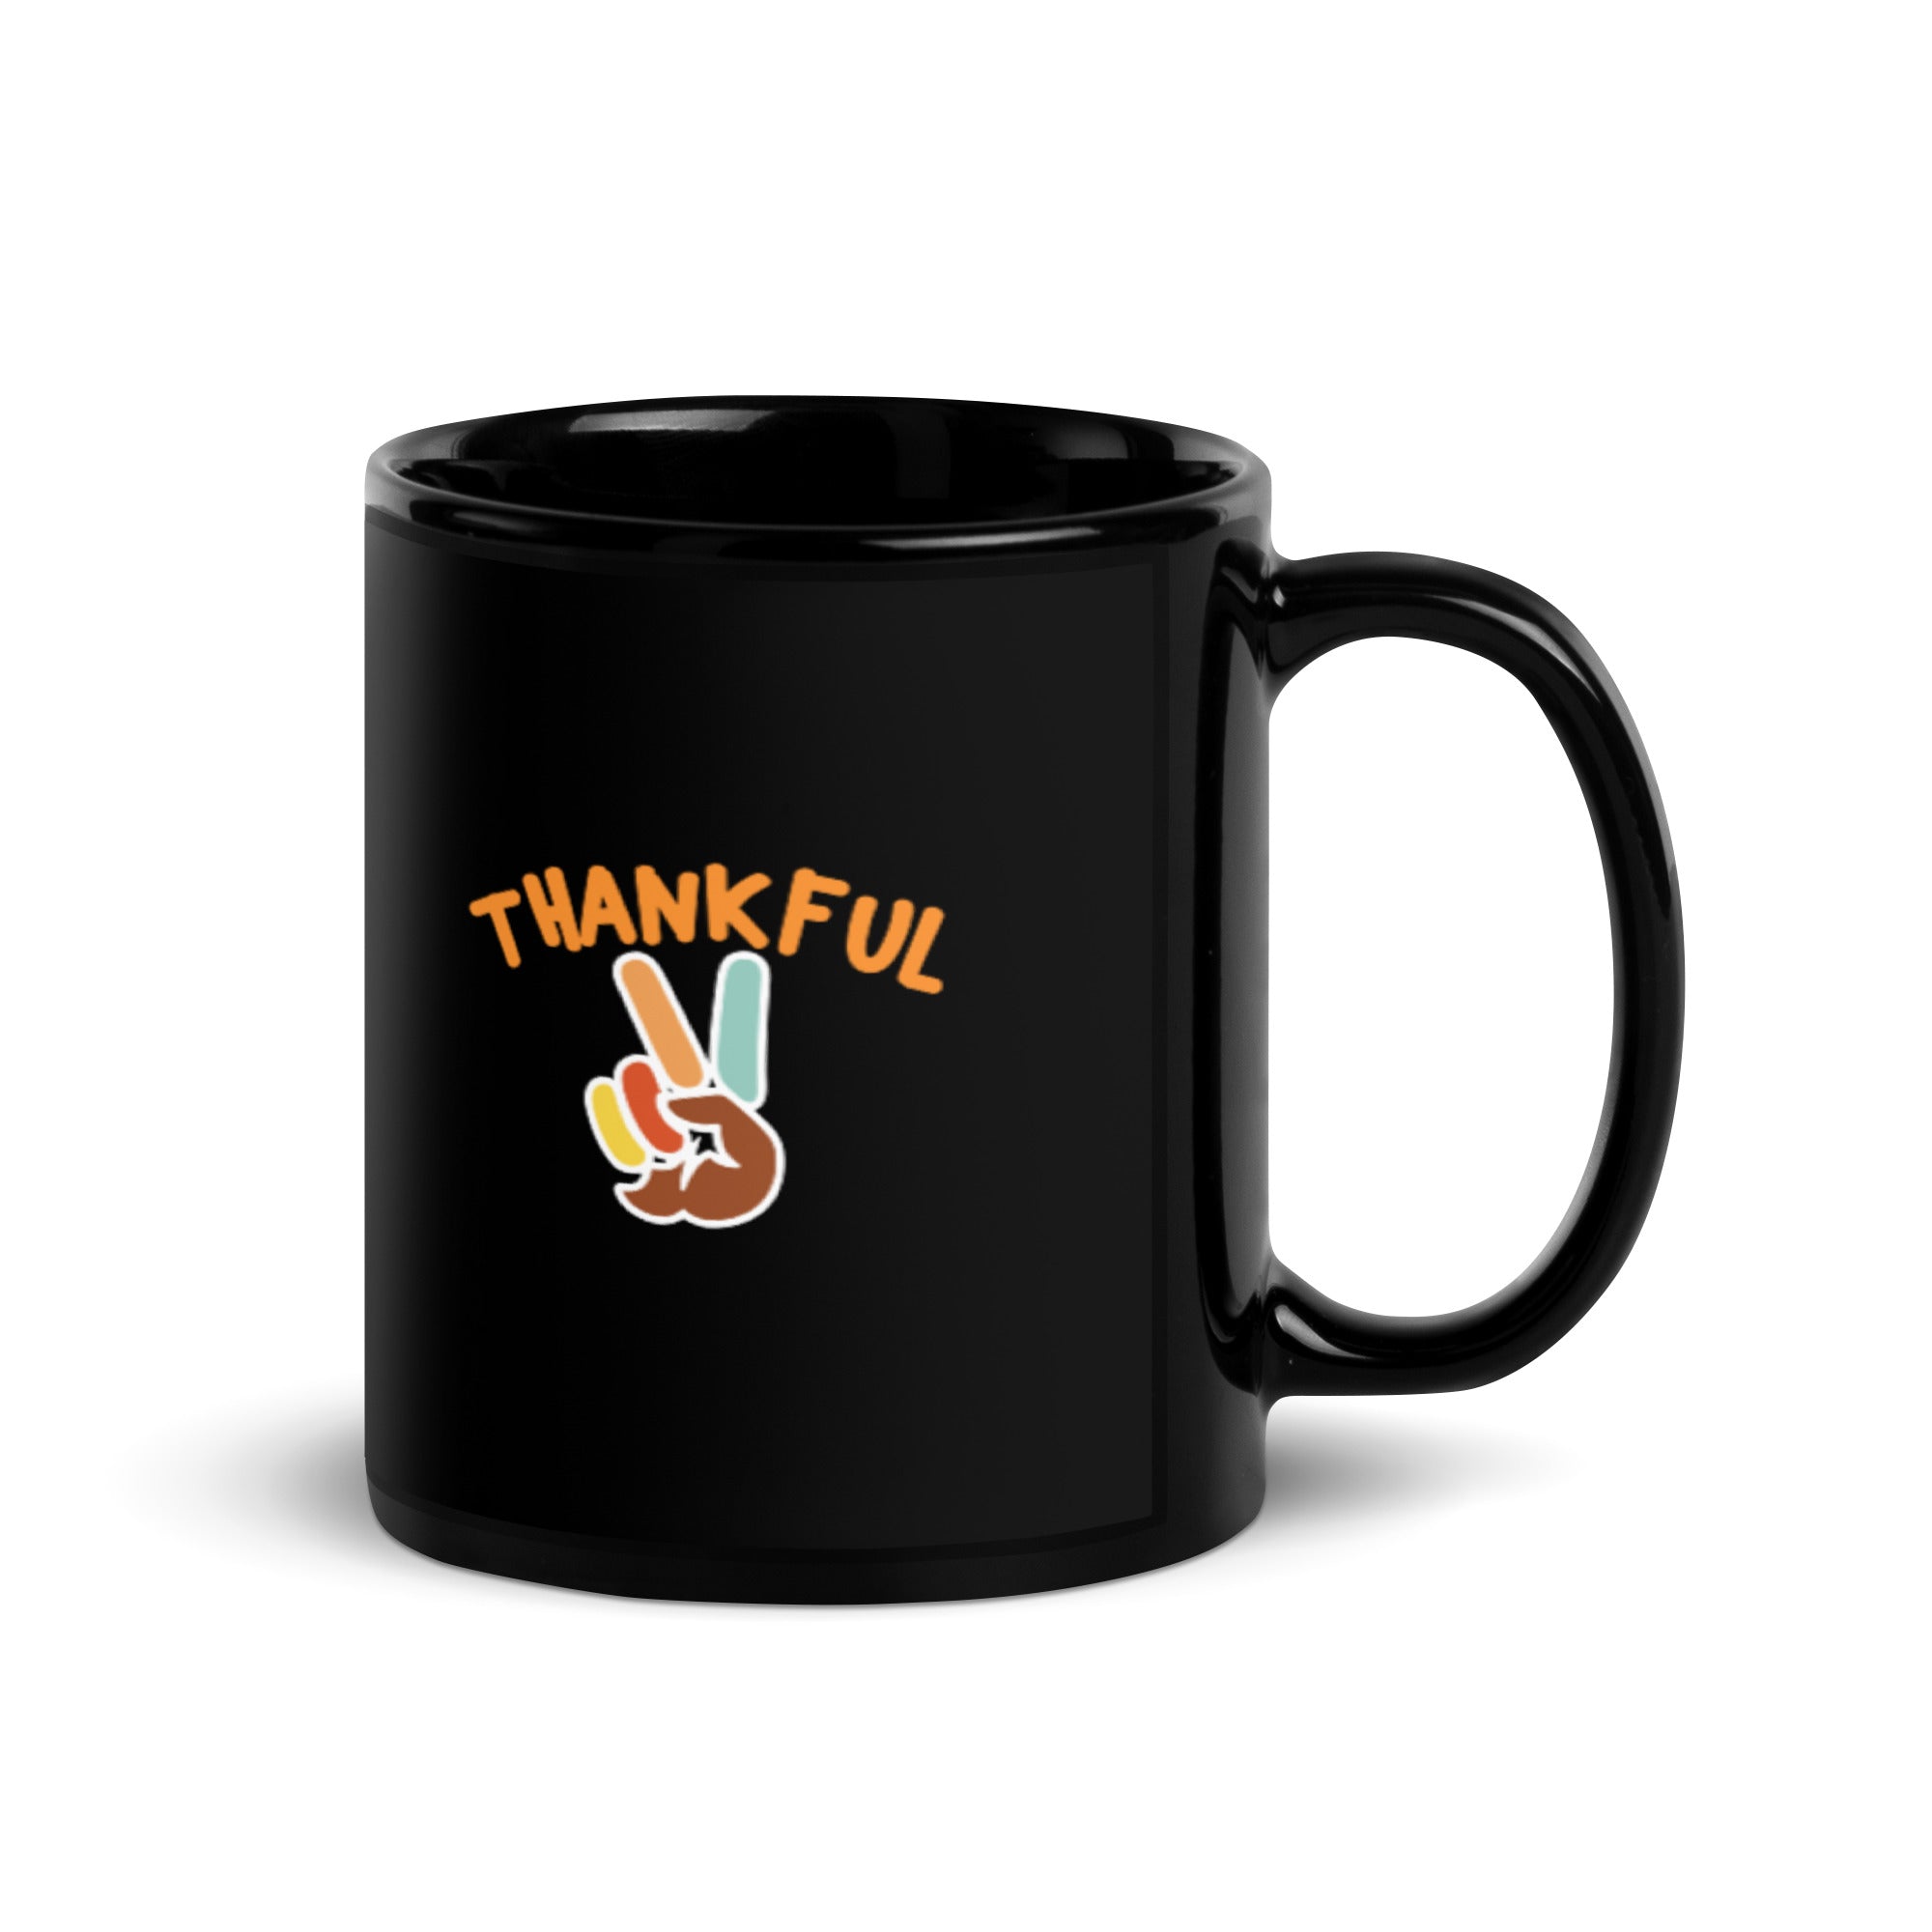 Thankful - Black Glossy Mug